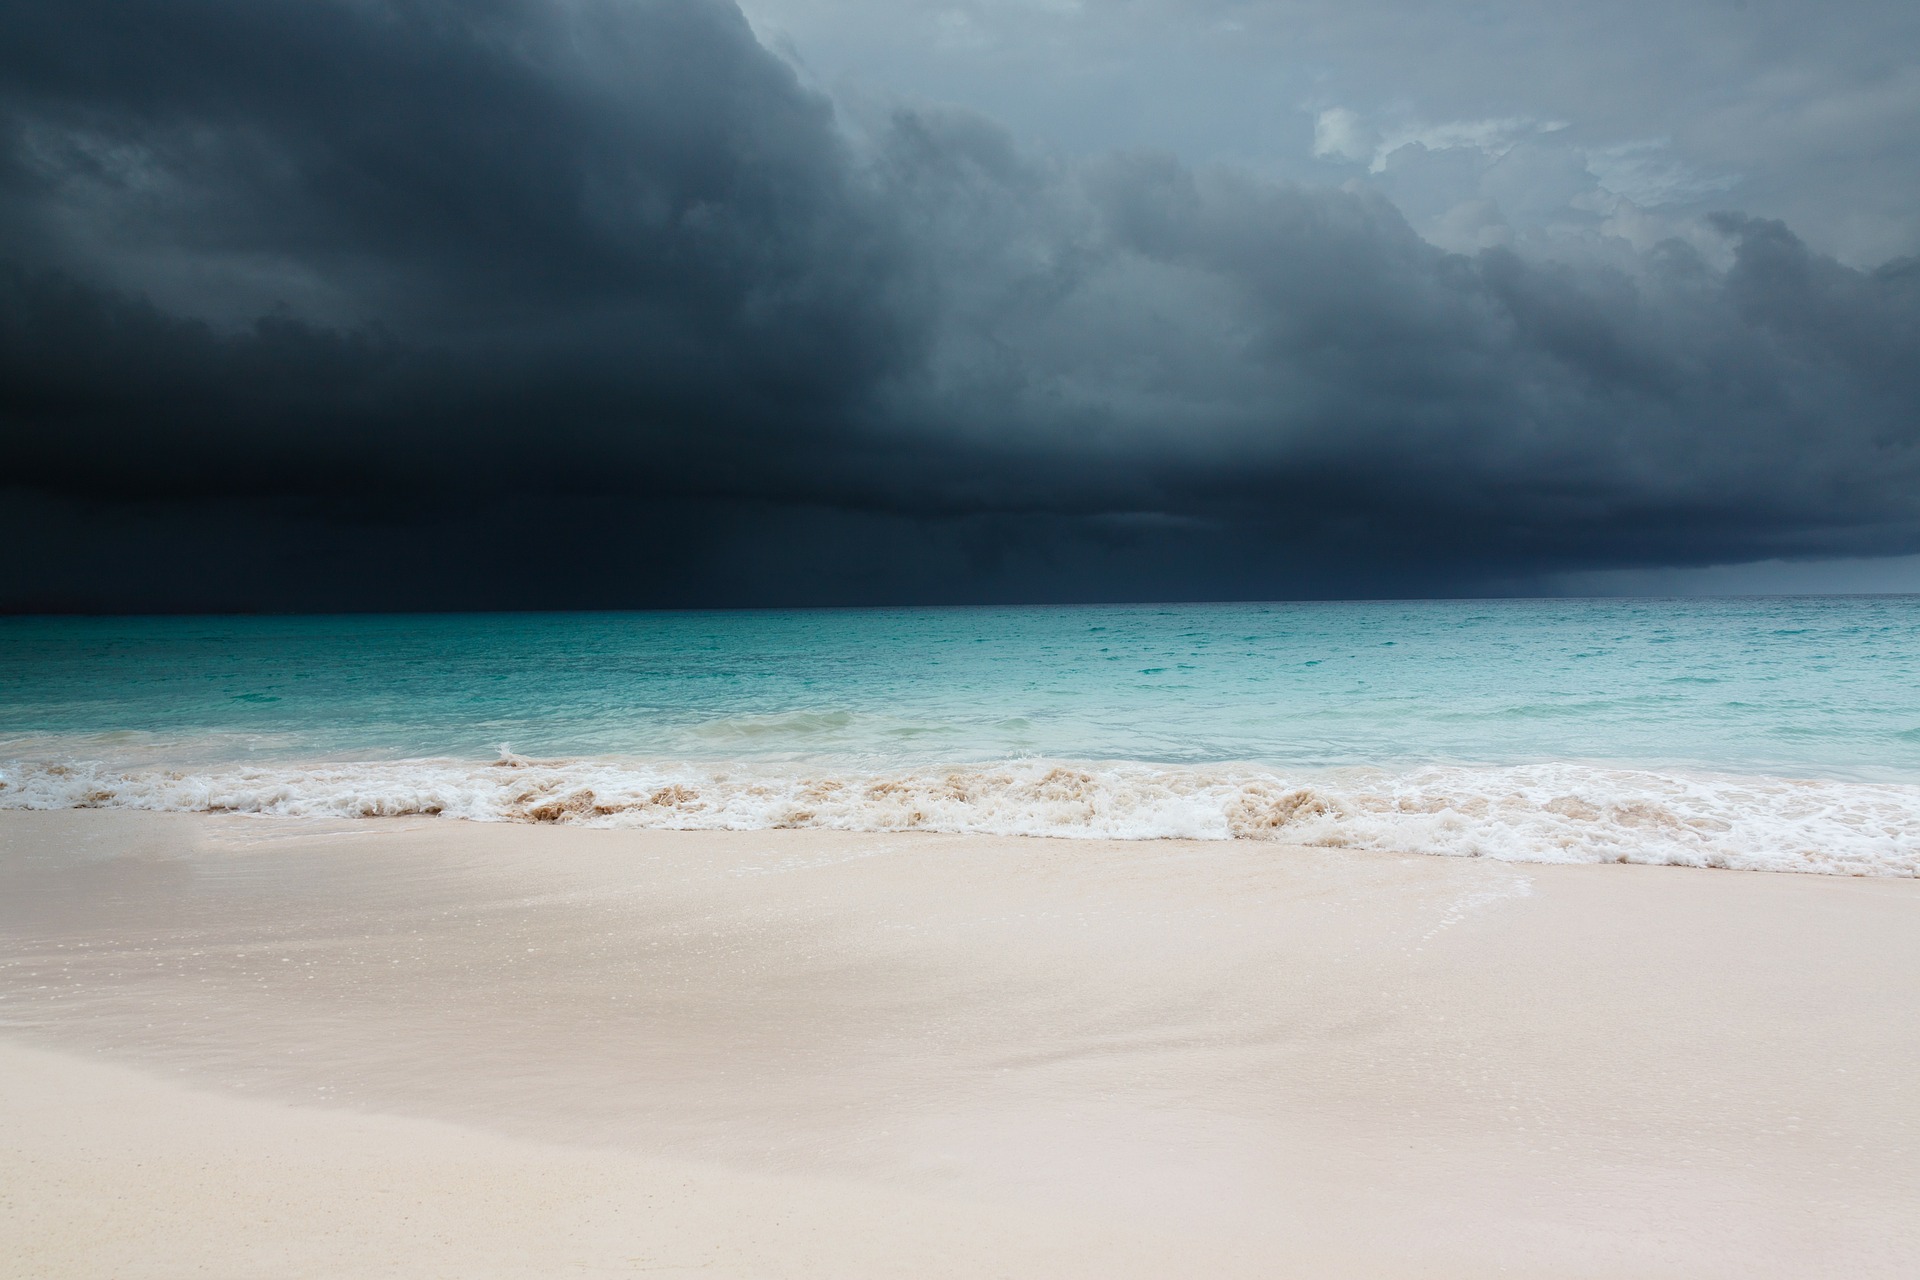 Beach turquoise sea with dark clouds on horizon